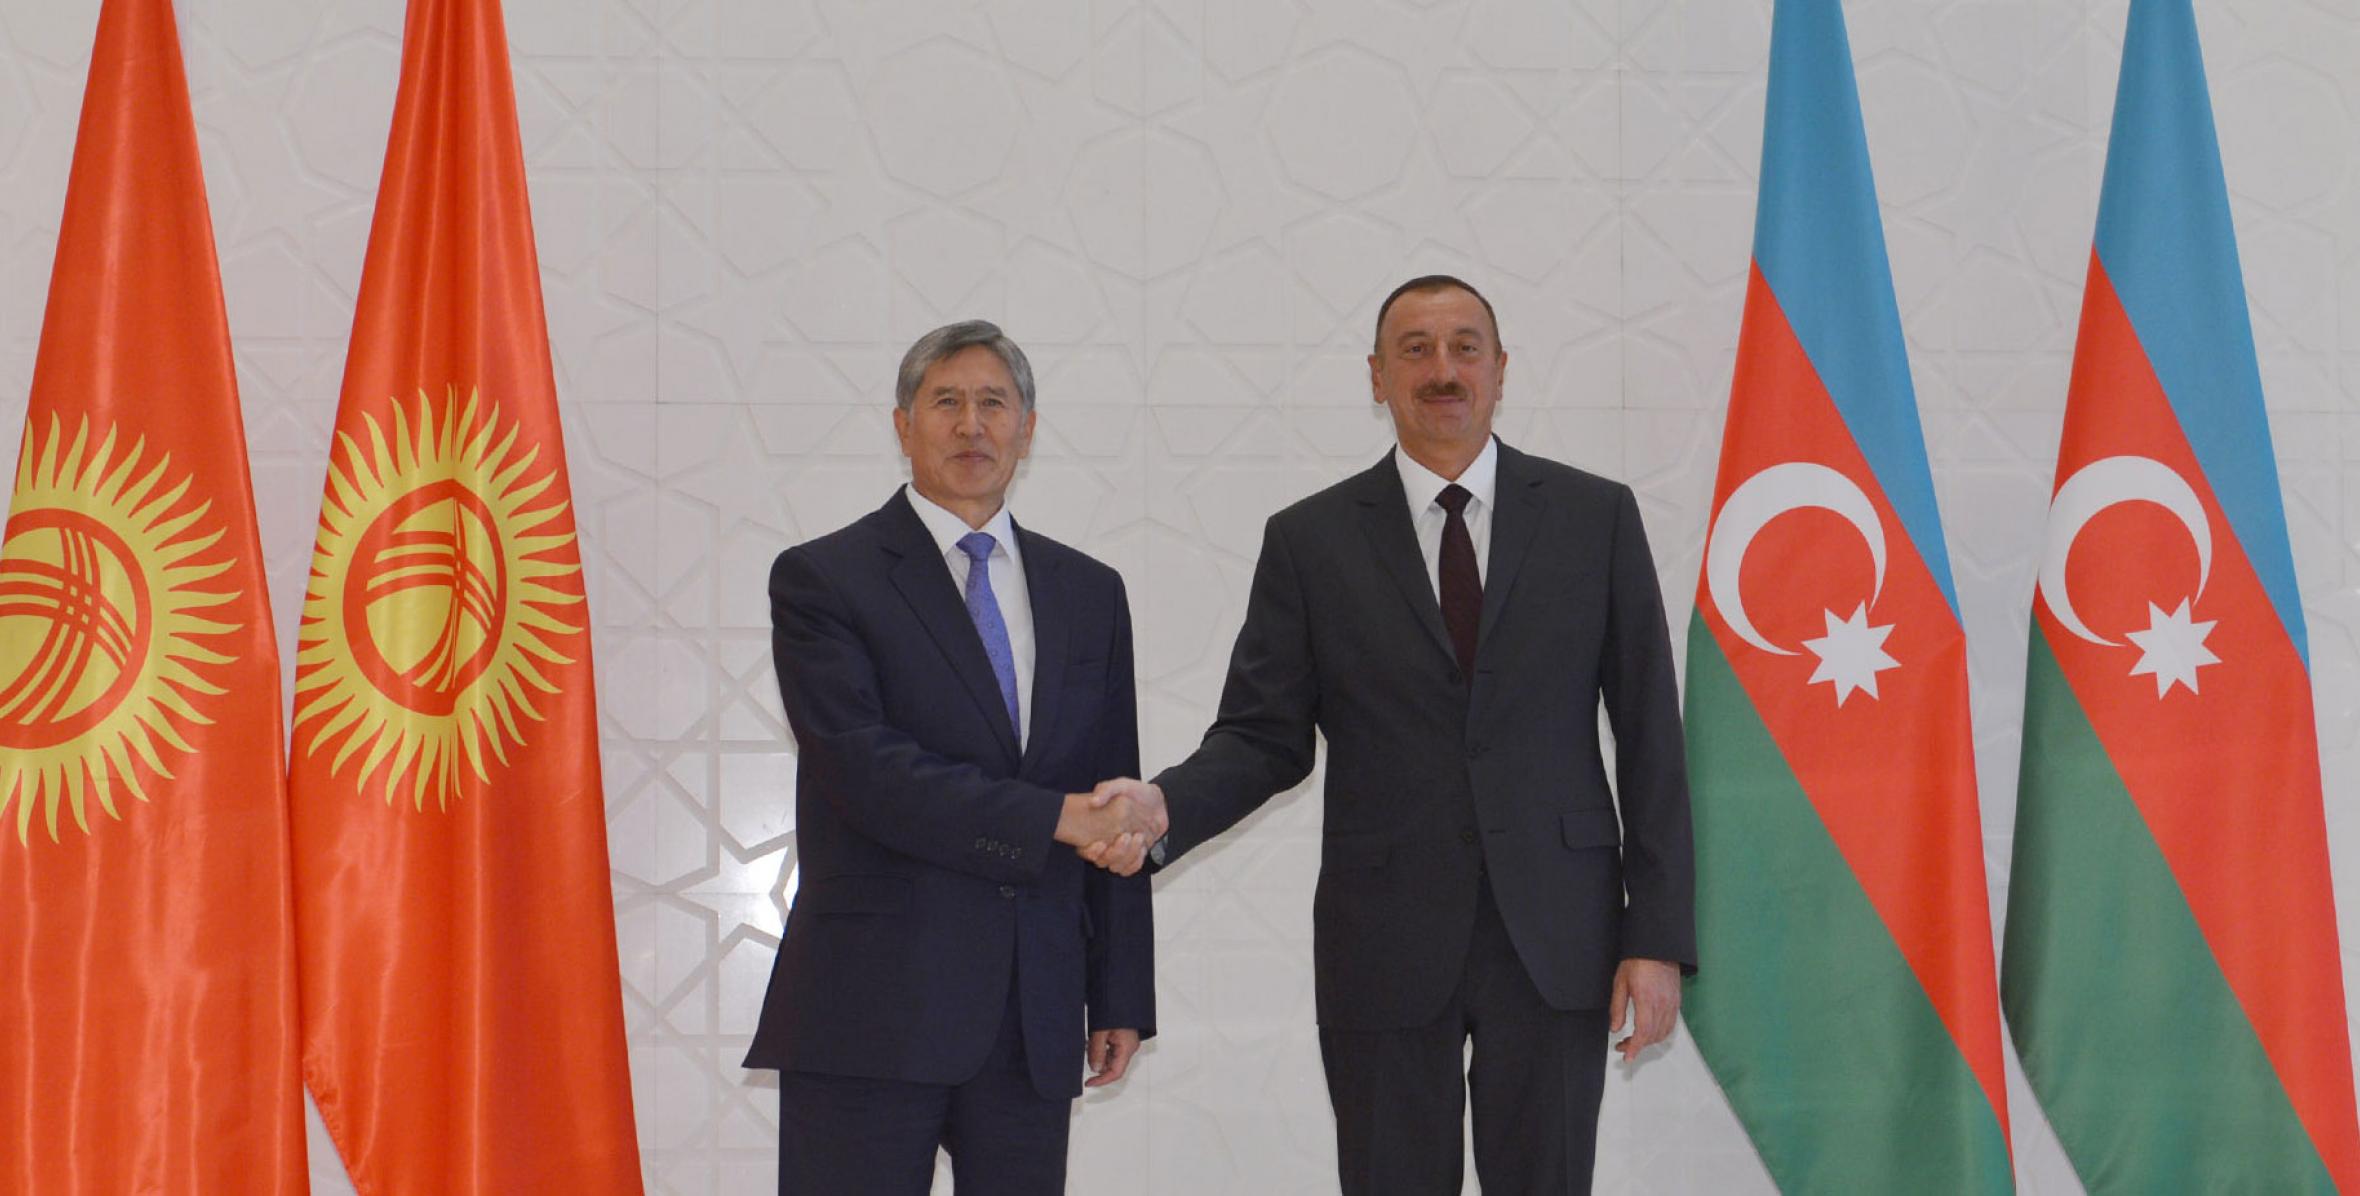 Ilham Aliyev met with President of the Kyrgyz Republic Almazbek Atambayev in Gabala